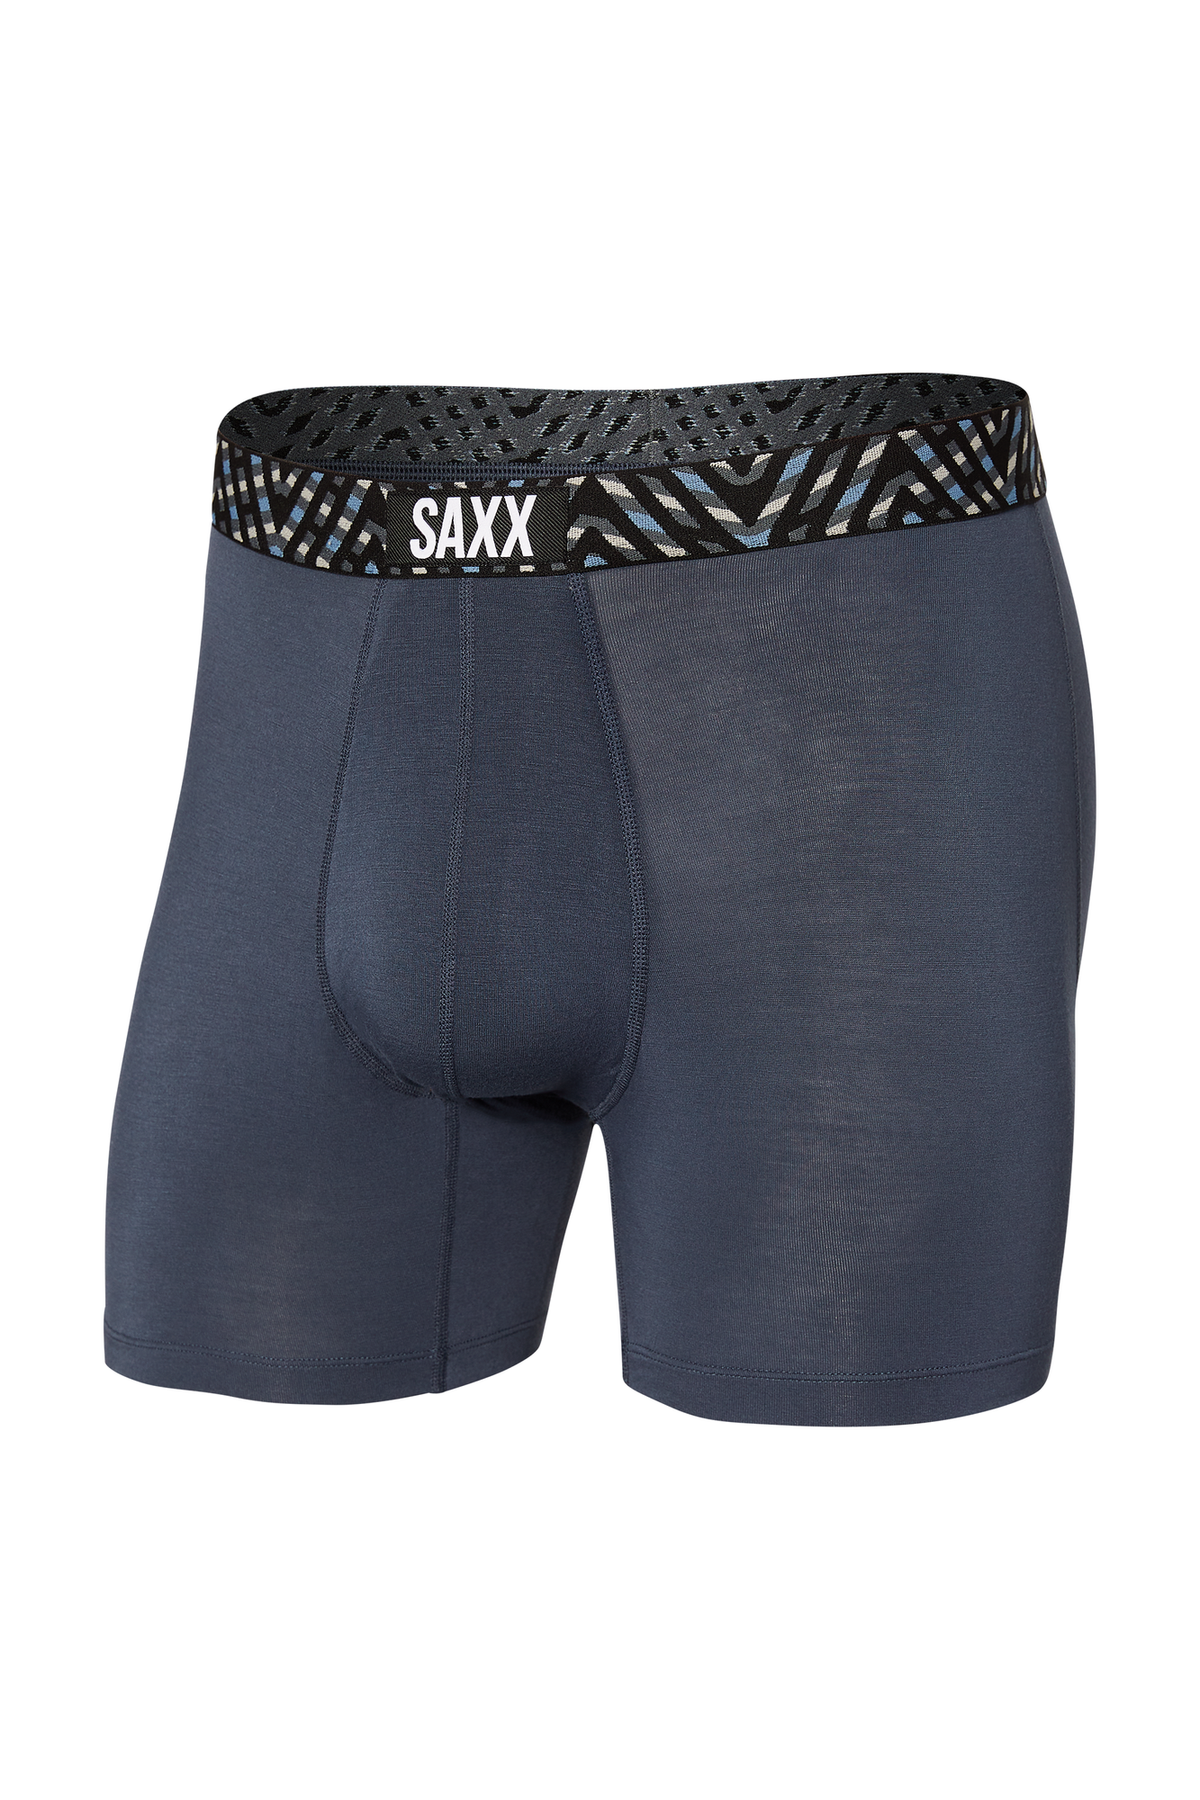 Saxx Ultra Soft Boxer Brief Two Pack - SXPP2U PCS